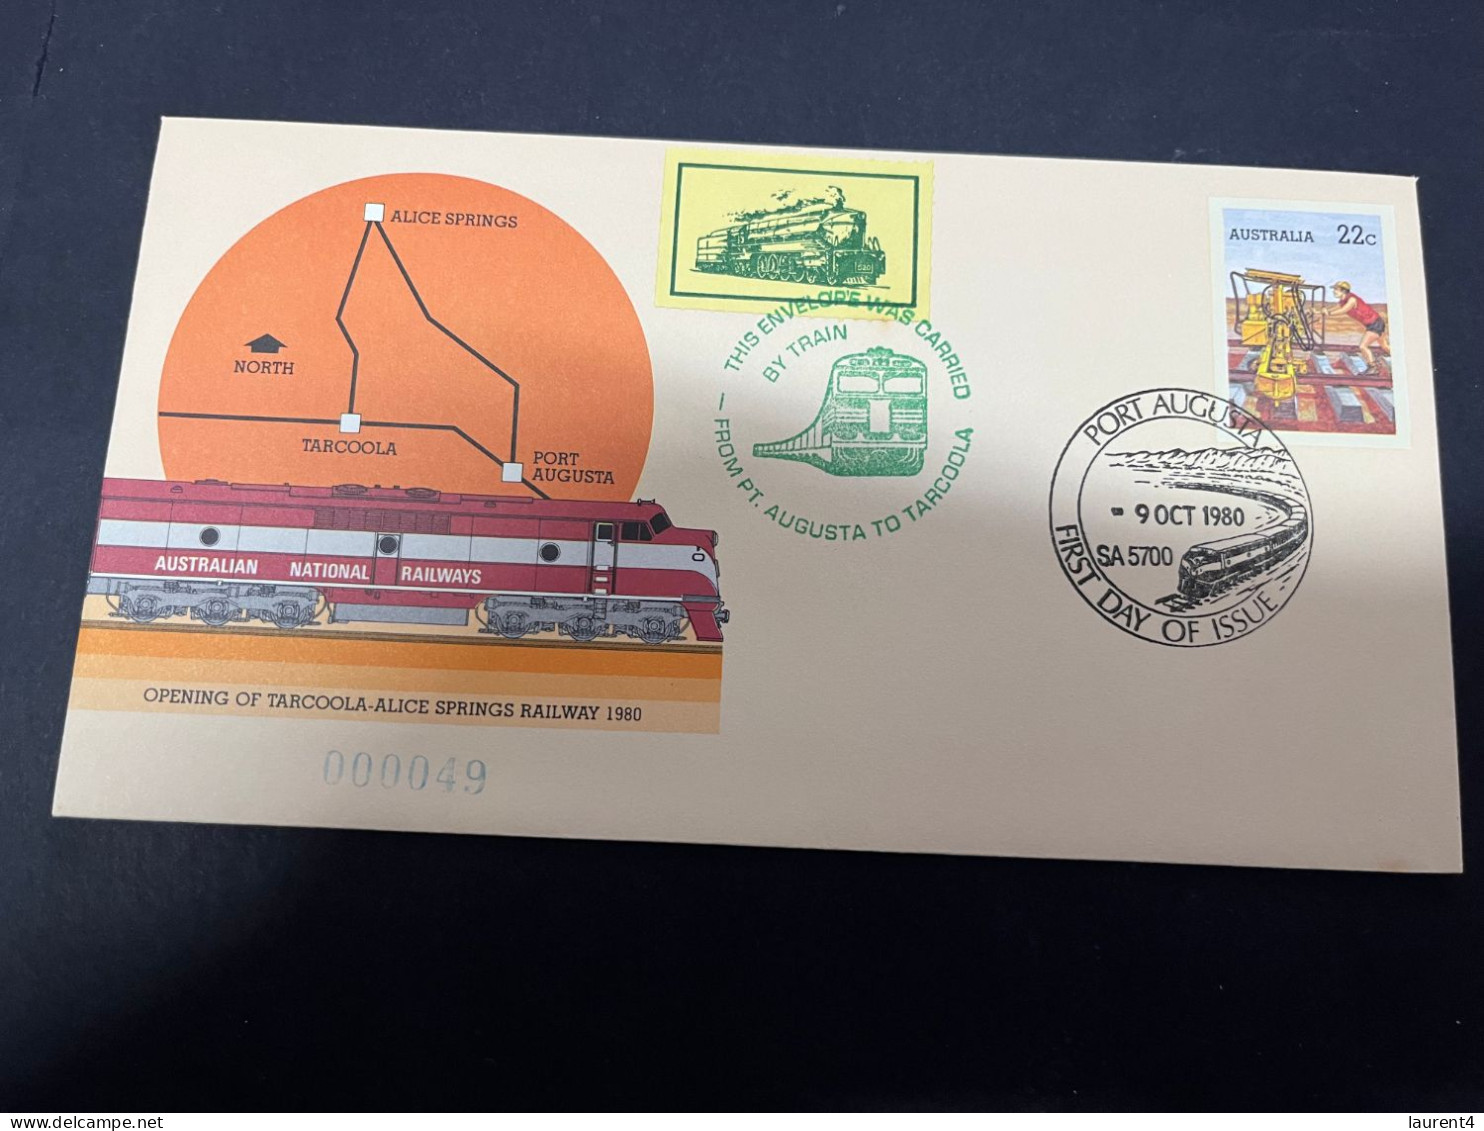 21-4-2024 (2 Z 39) Australia FDC Cover - 1980 - Railway Port Auguta To Tarcoola - Premiers Jours (FDC)